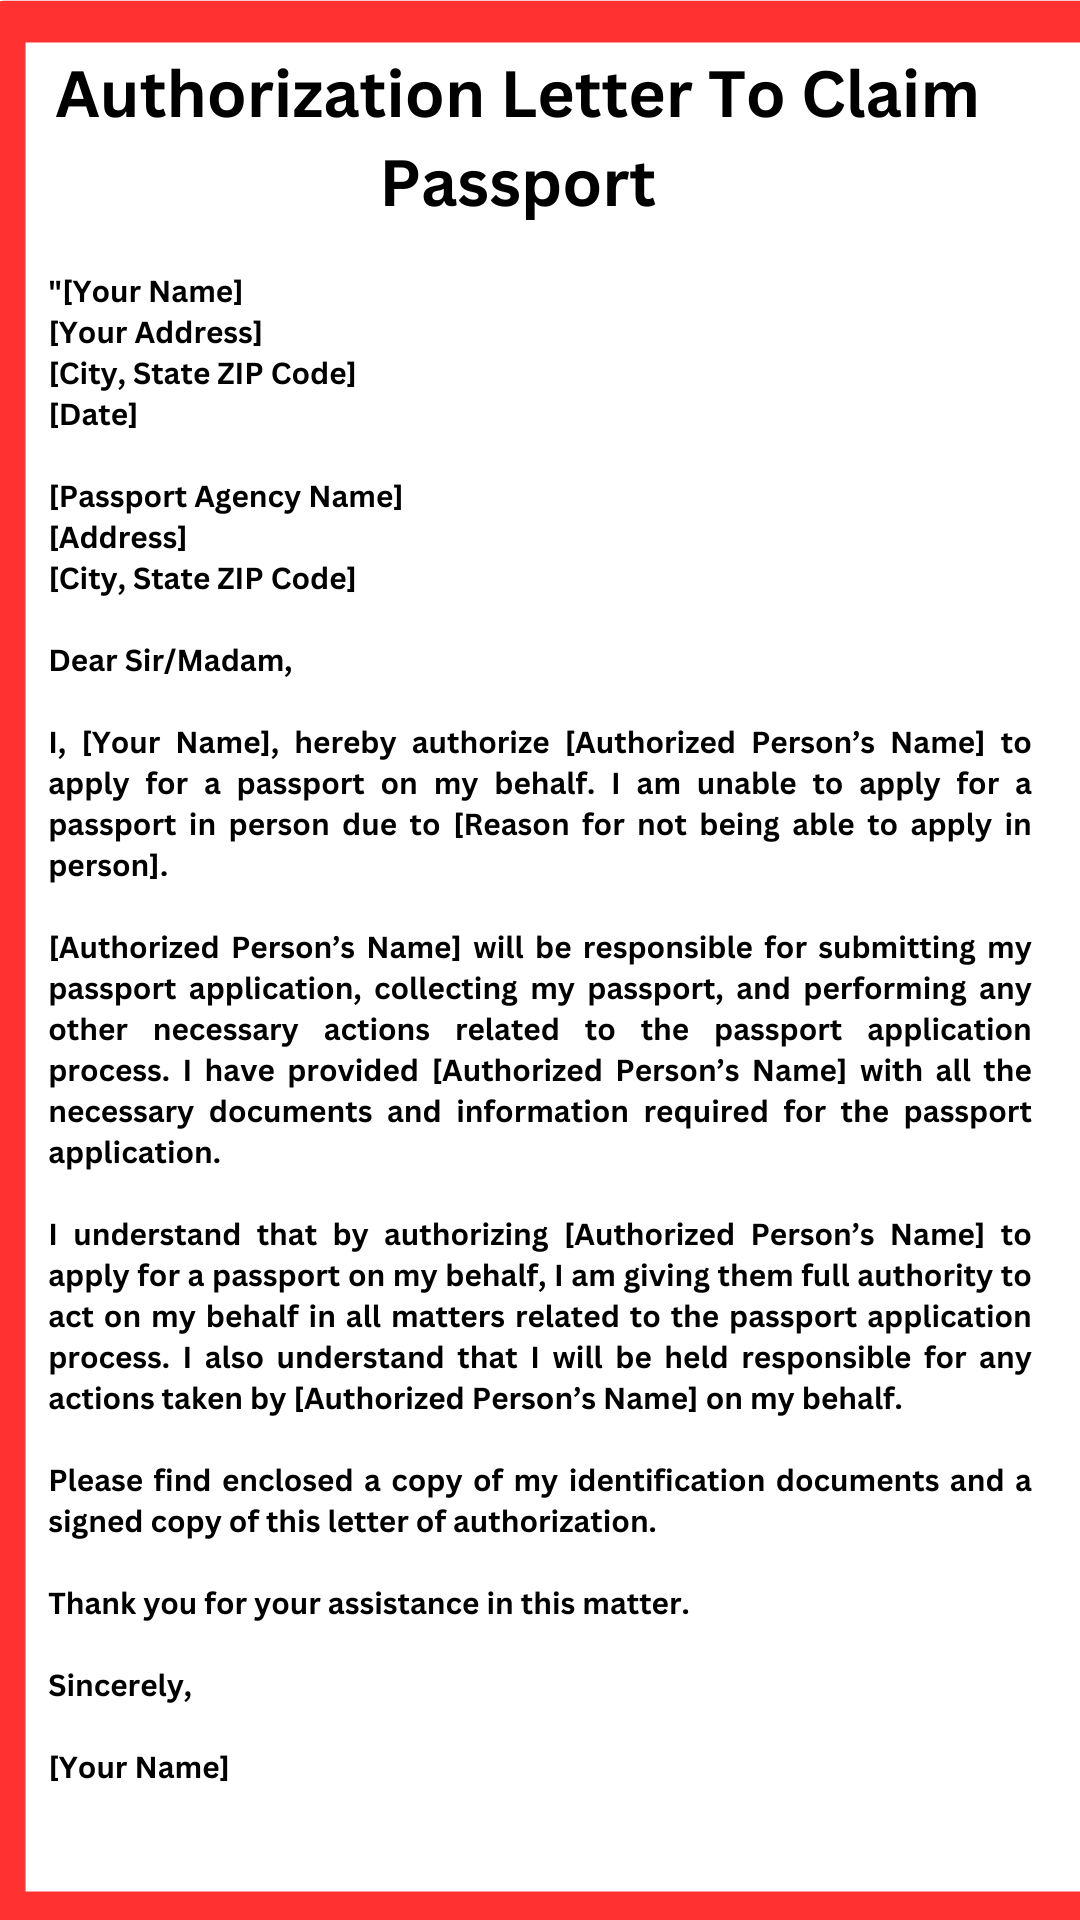 Authorization Letter To Claim Passport